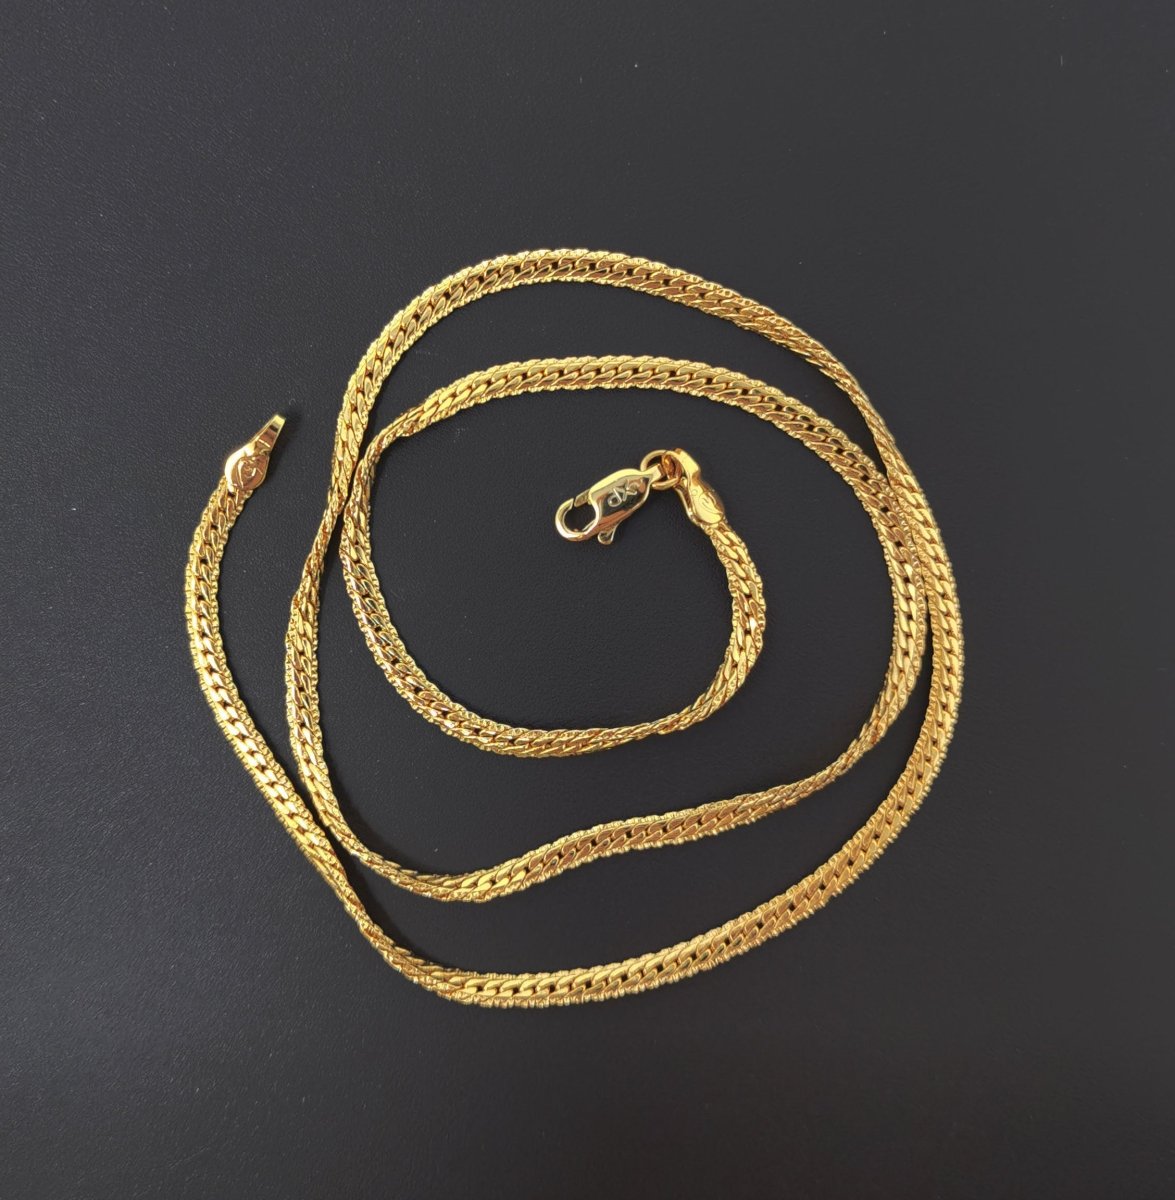 TUOKAY Fake Big Gold Herringbone Chain Necklace Costume 12mm Thick Faux Gold  Herringbone Necklace Chain Fashion Hip Hop Snake Chain Women Men School  Rapper 24